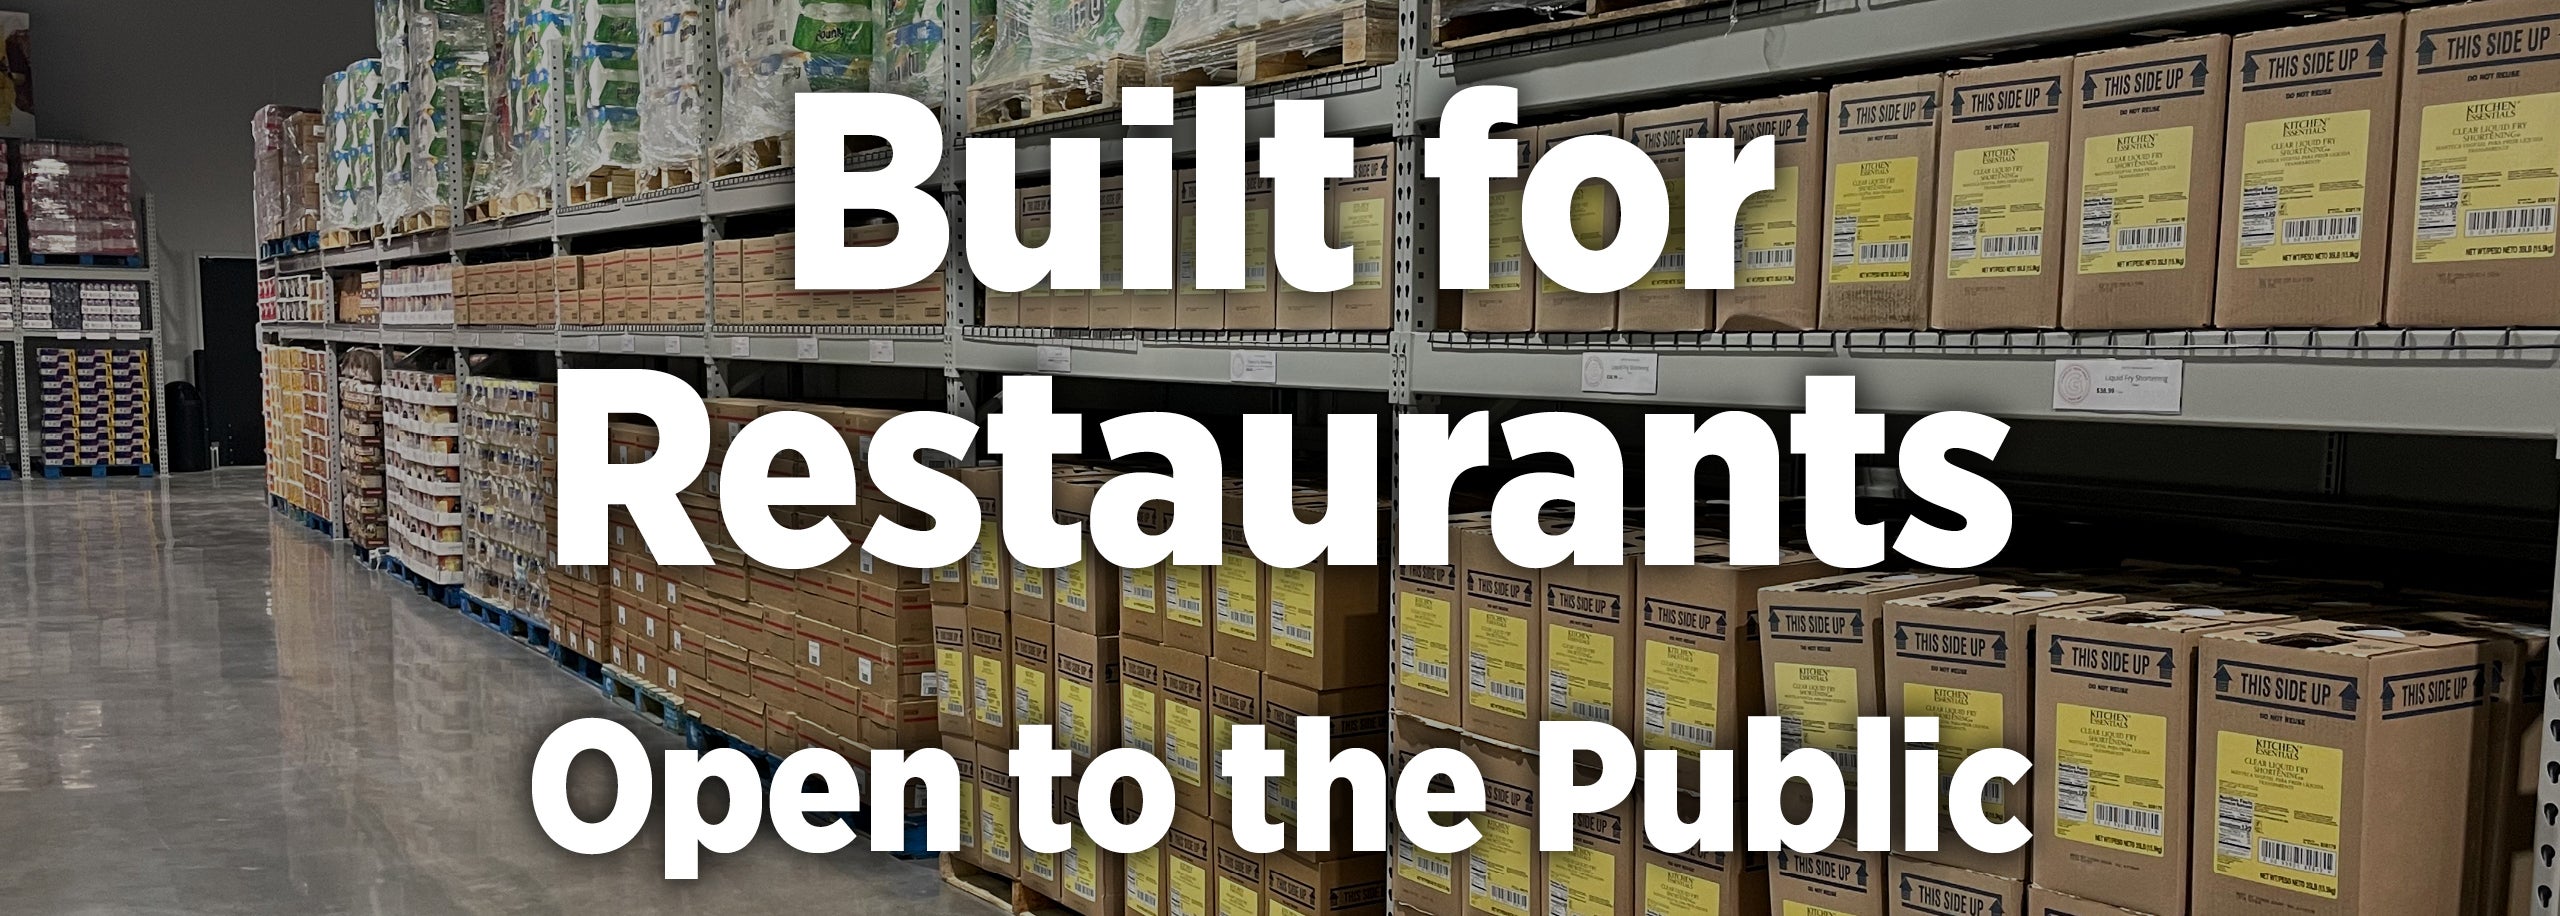 Built for Restaurants, Open to the Public